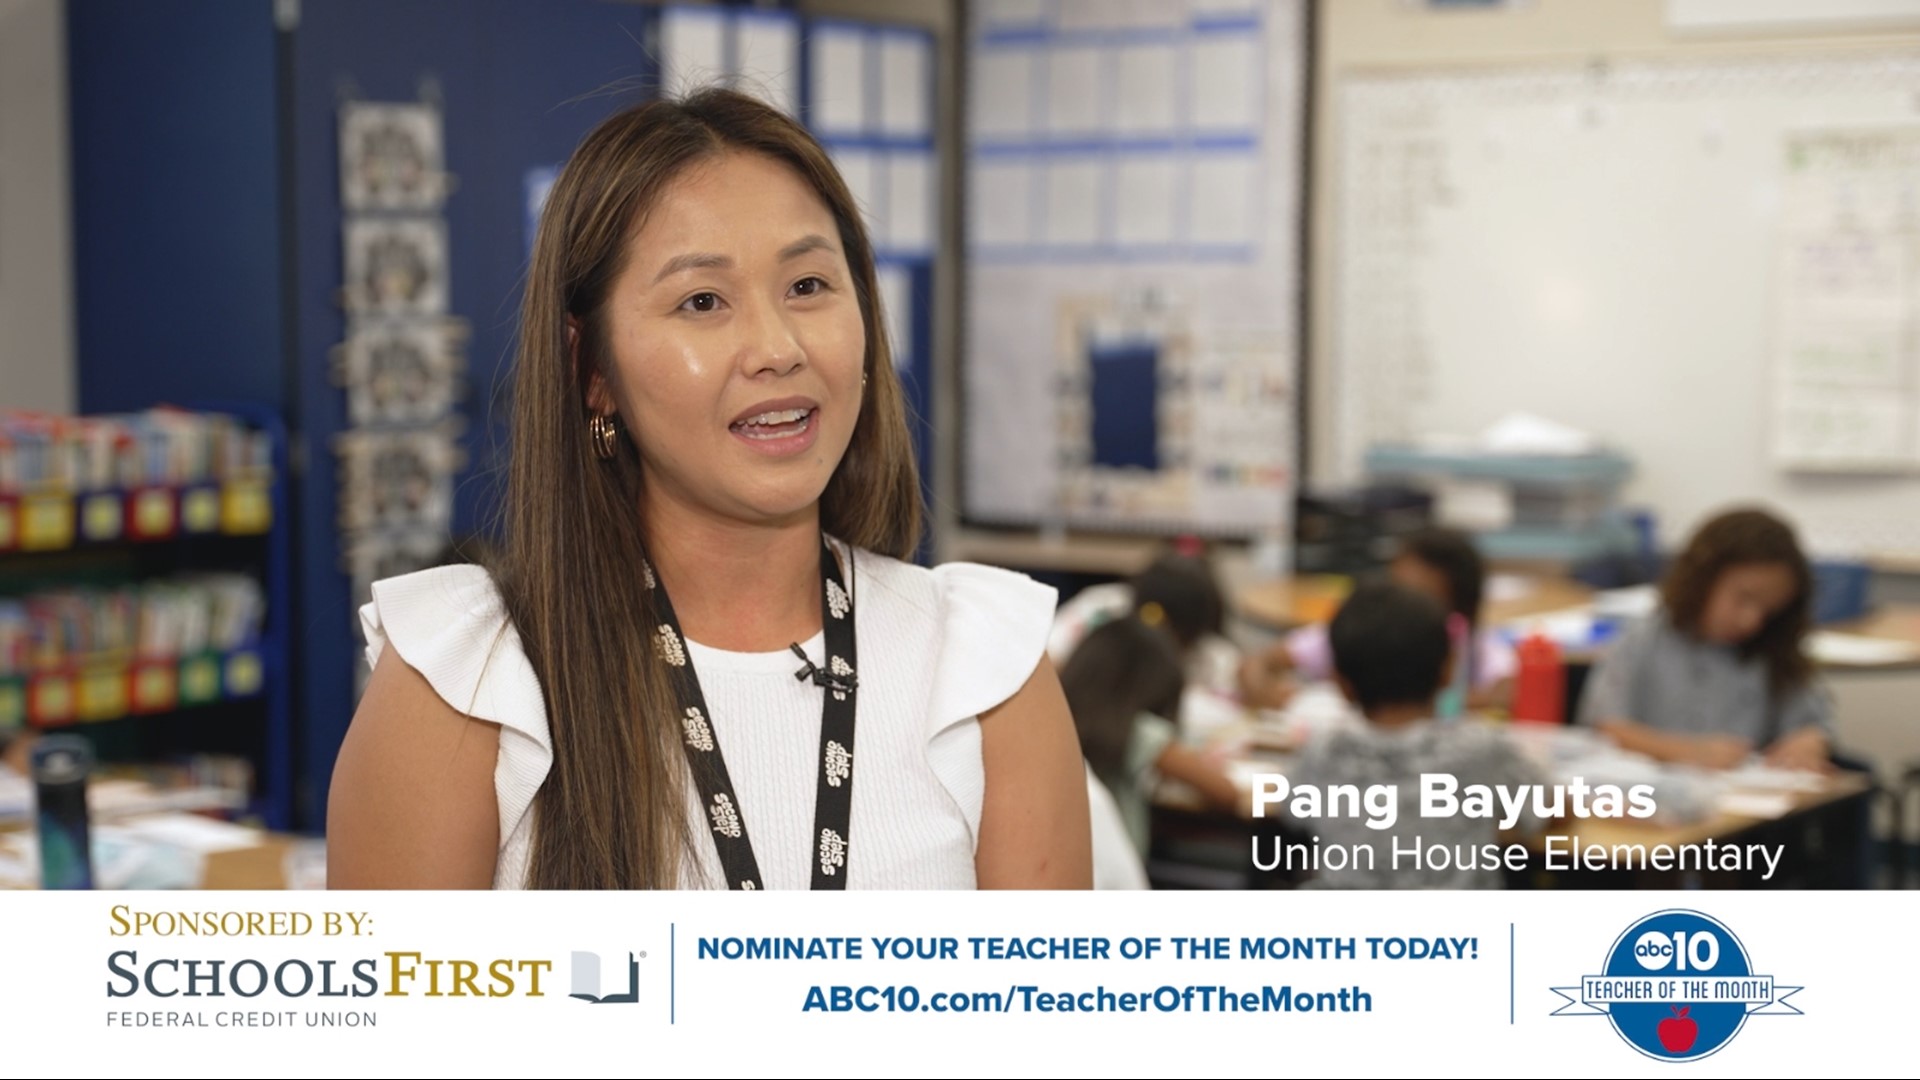 Ms. Bayutas teaches second grade at Union House Elementary in Sacramento, CA.